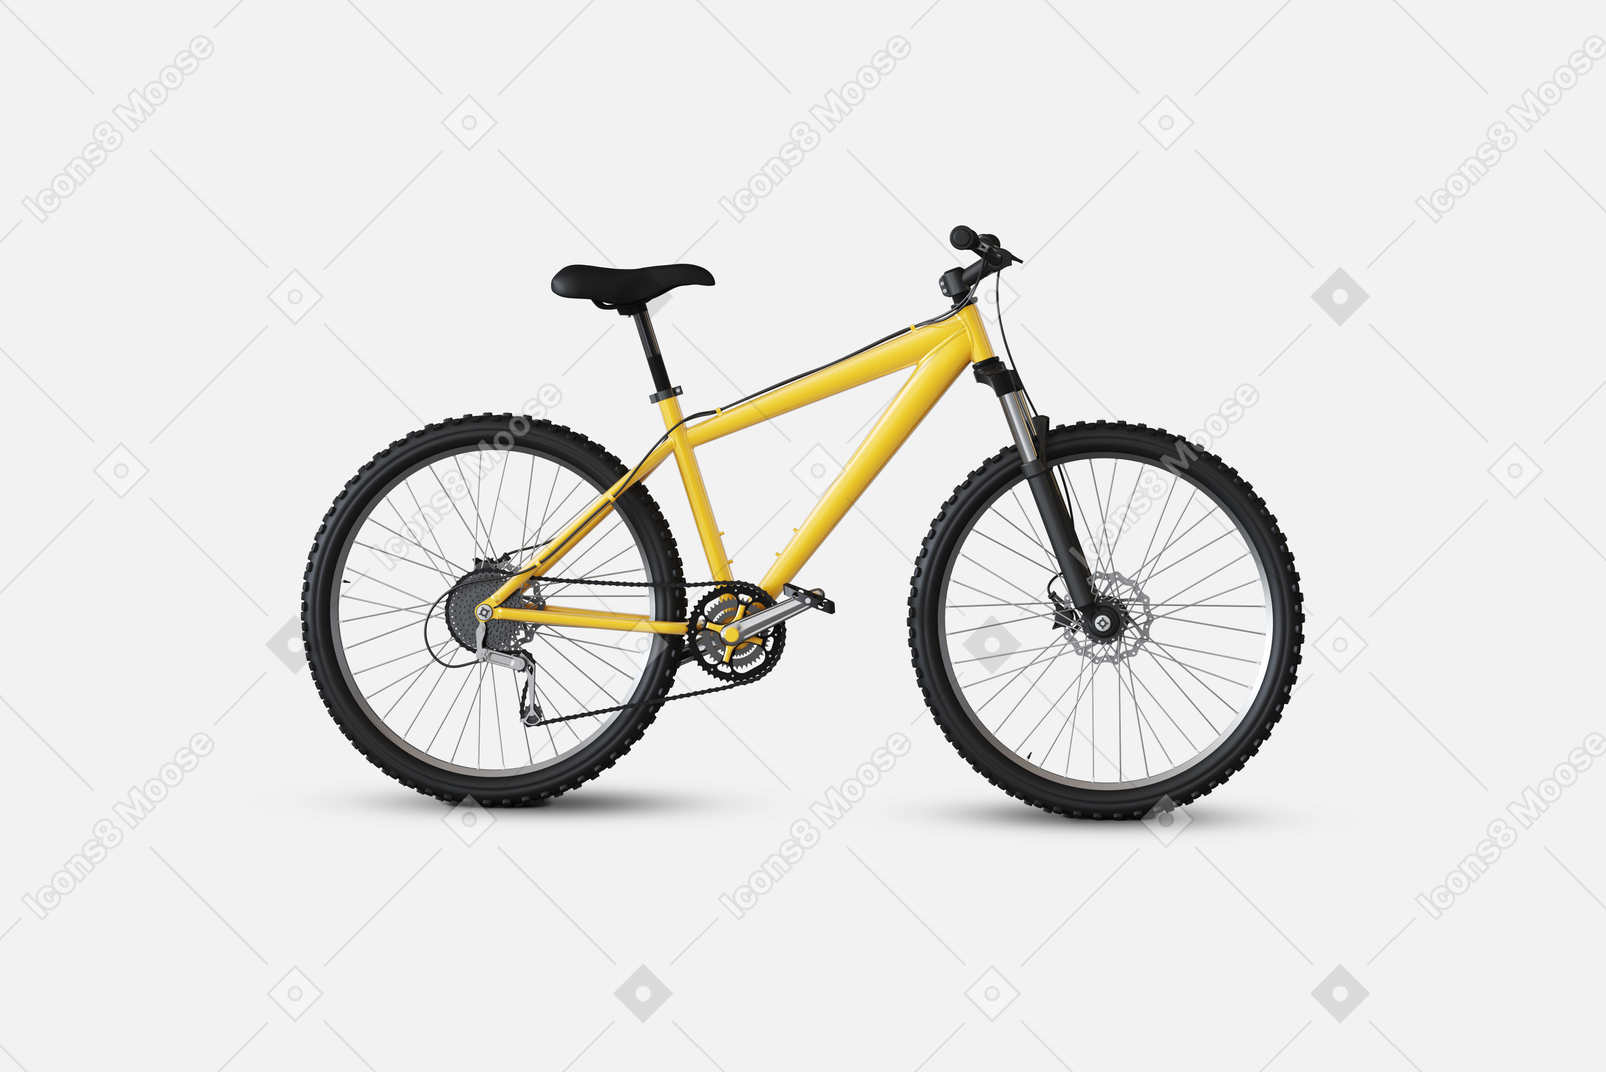 Black and yellow sportive bike